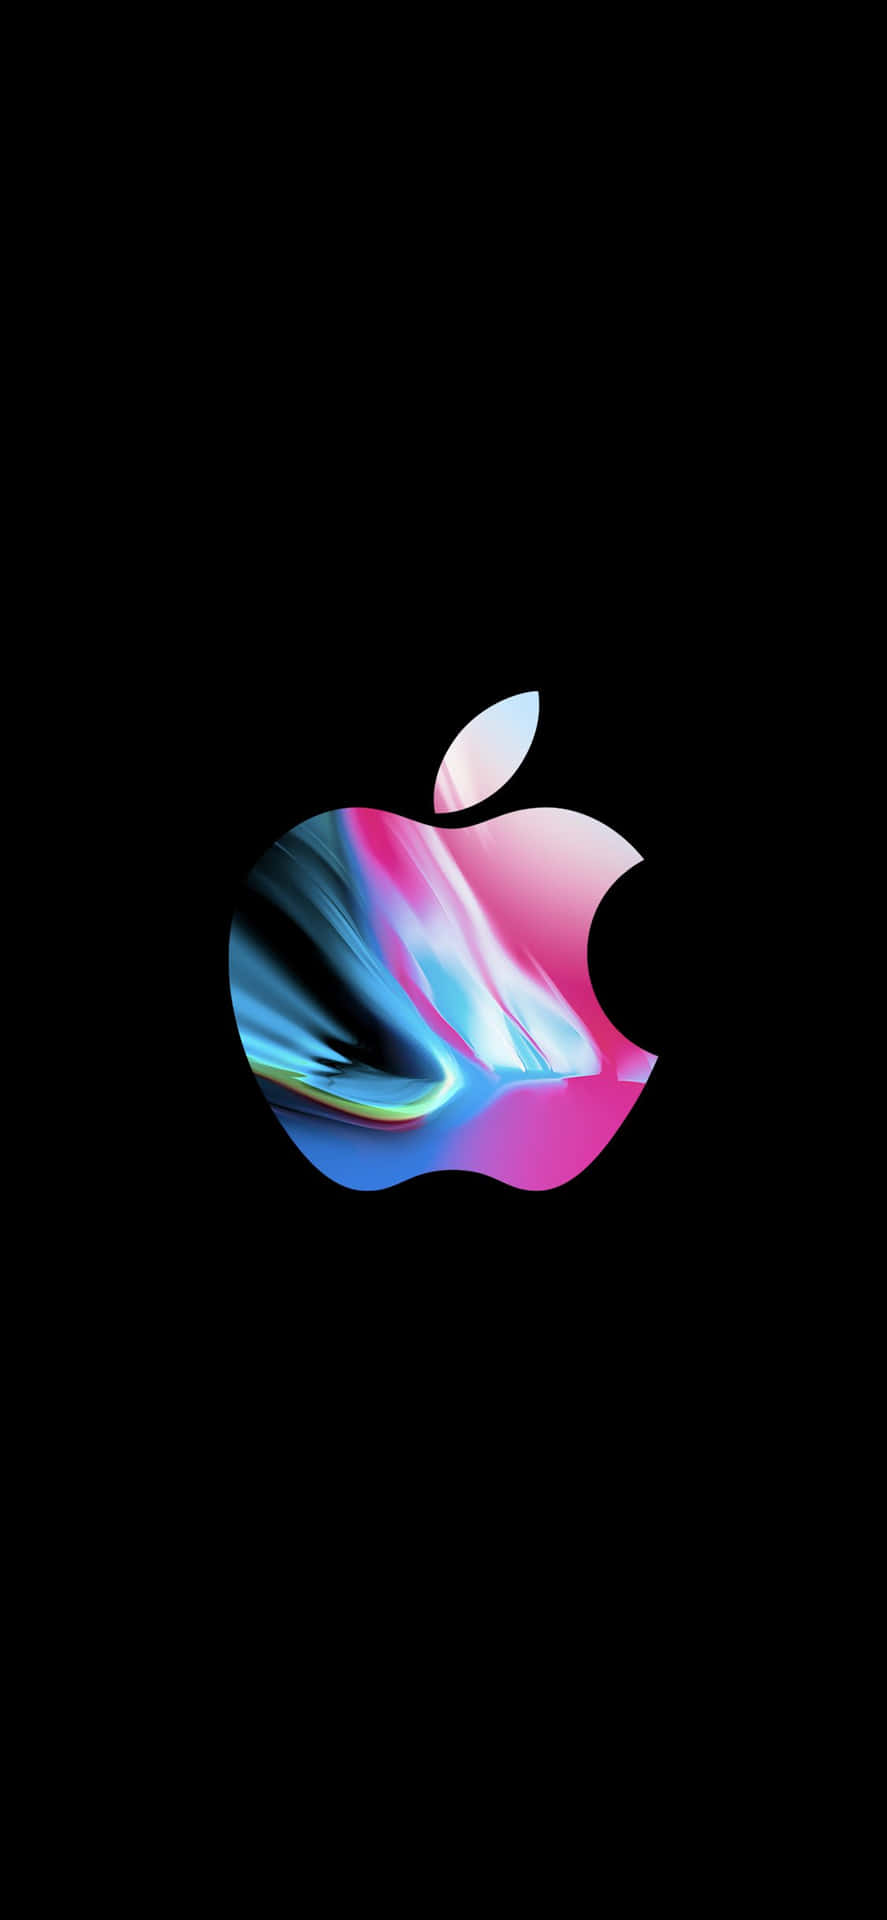 Iphone X Apple Logo Swirl Wallpaper